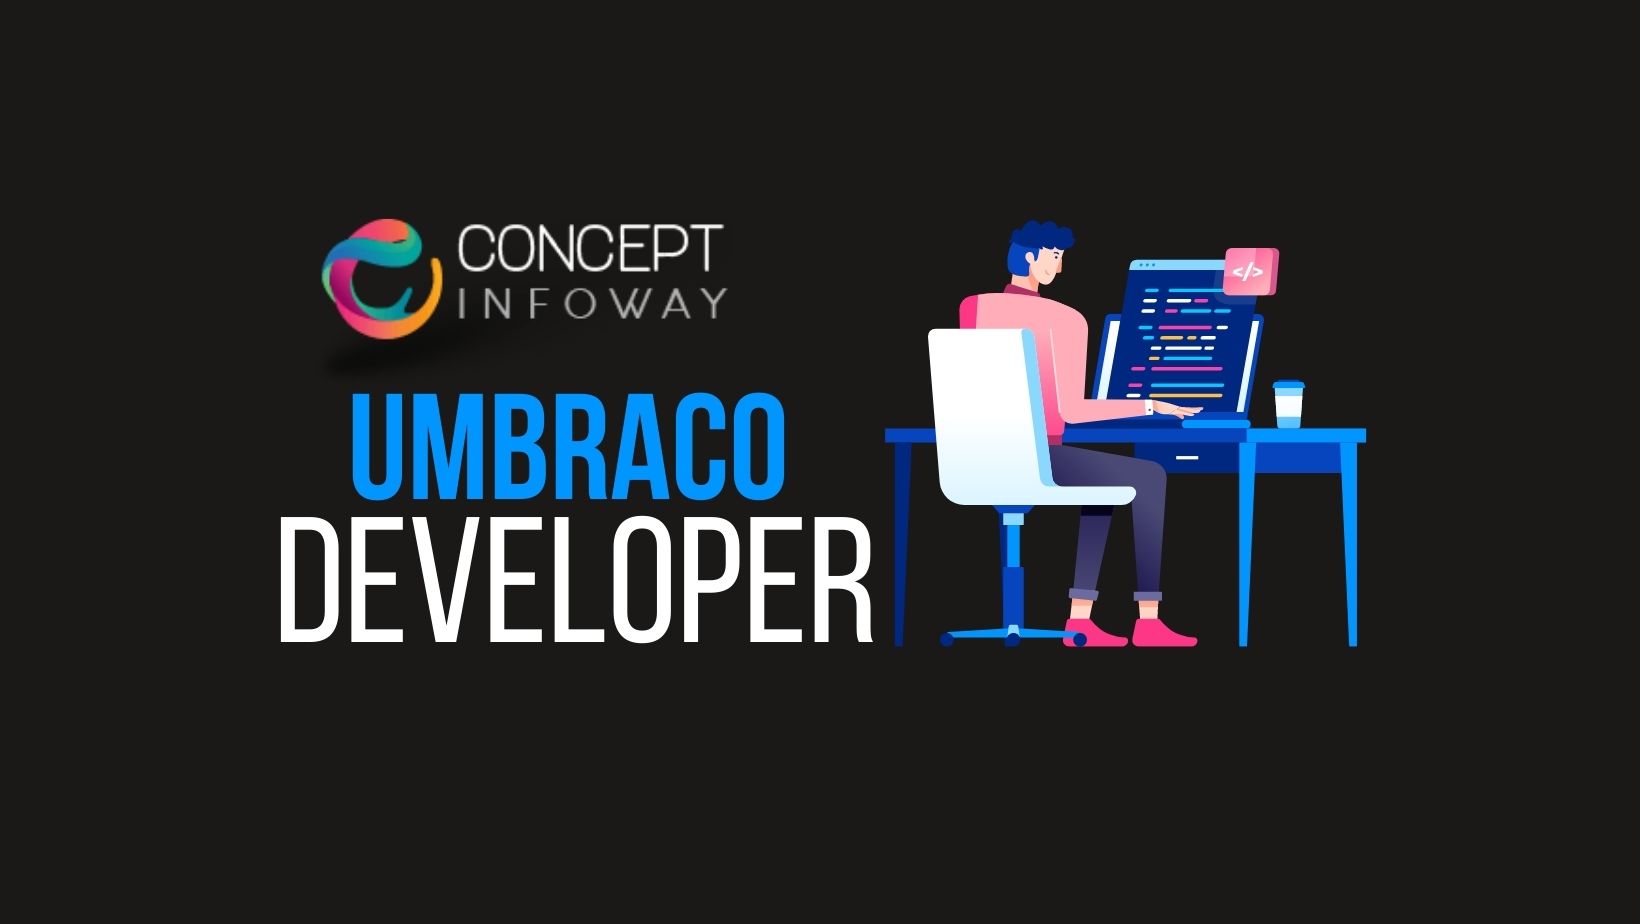 Umbraco Developer - Concept Infoway